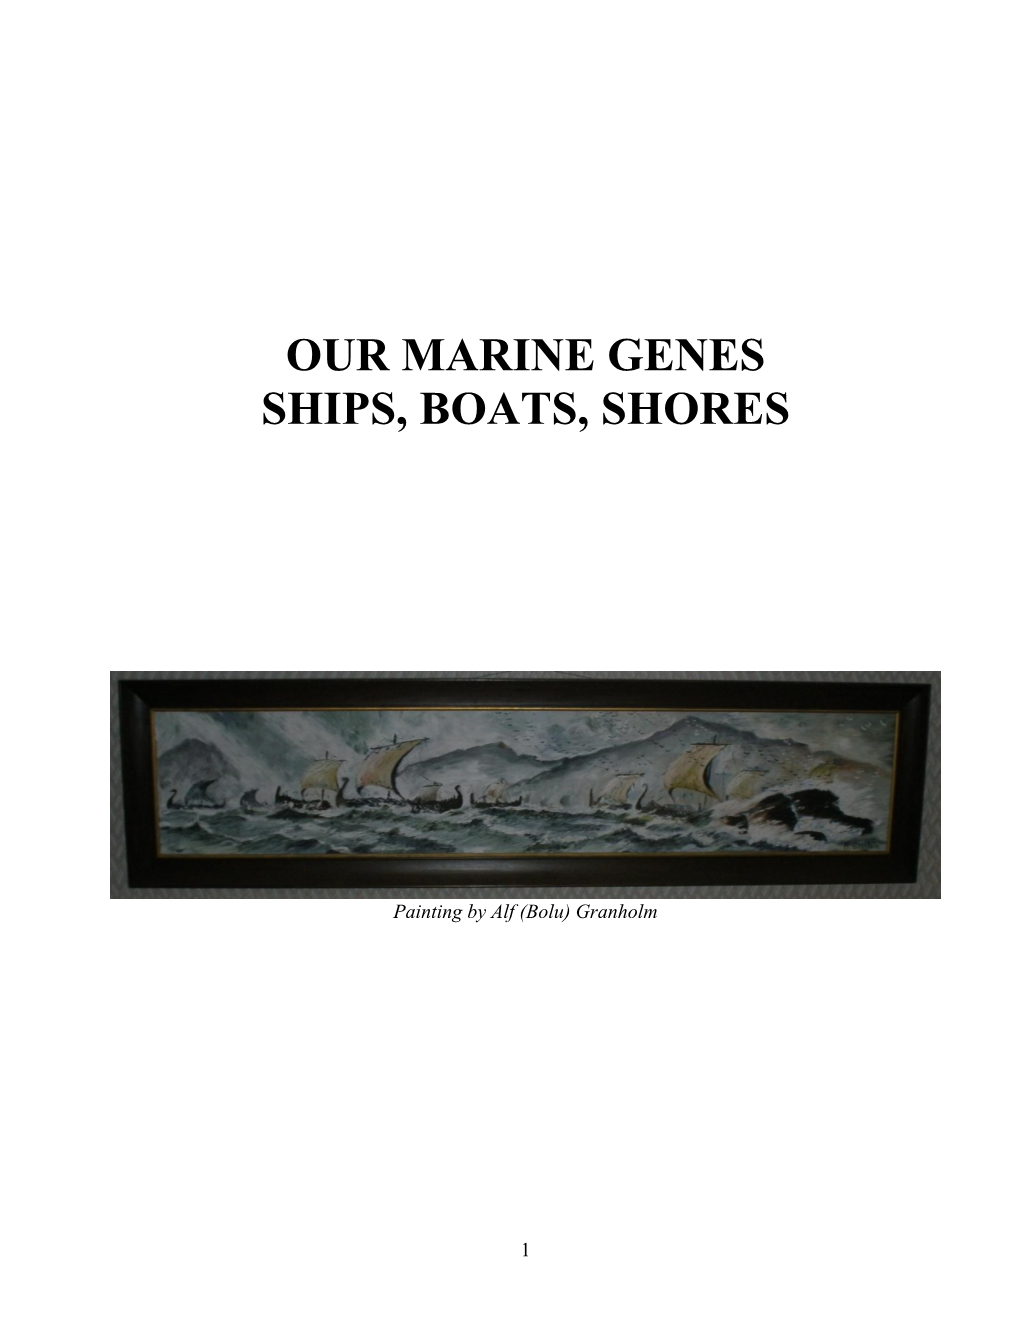 “Our Marine Genes”